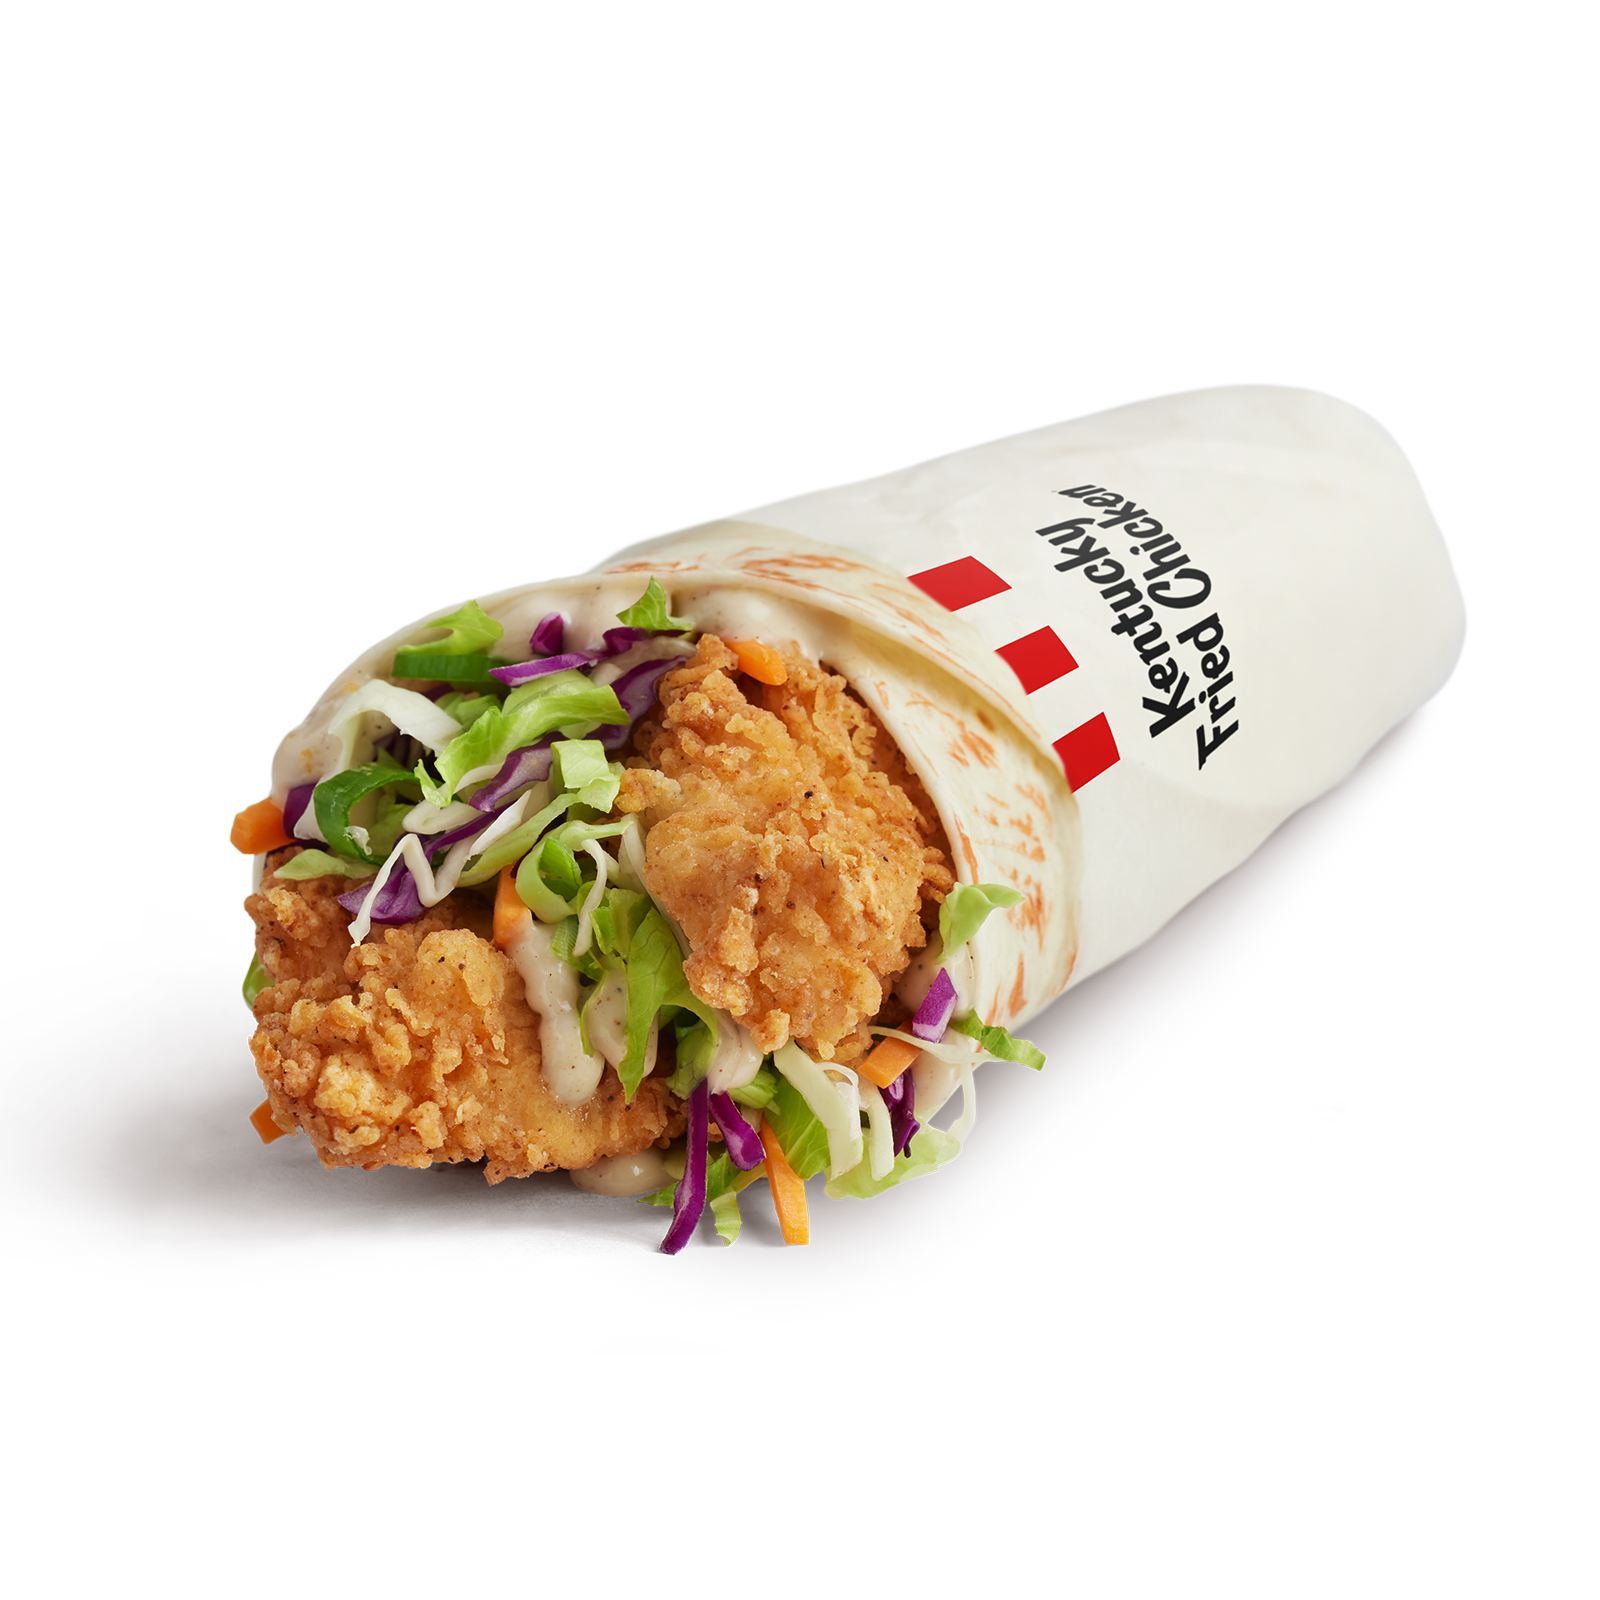 Original Crunch Twister® Twisters & Bowls KFC Menu